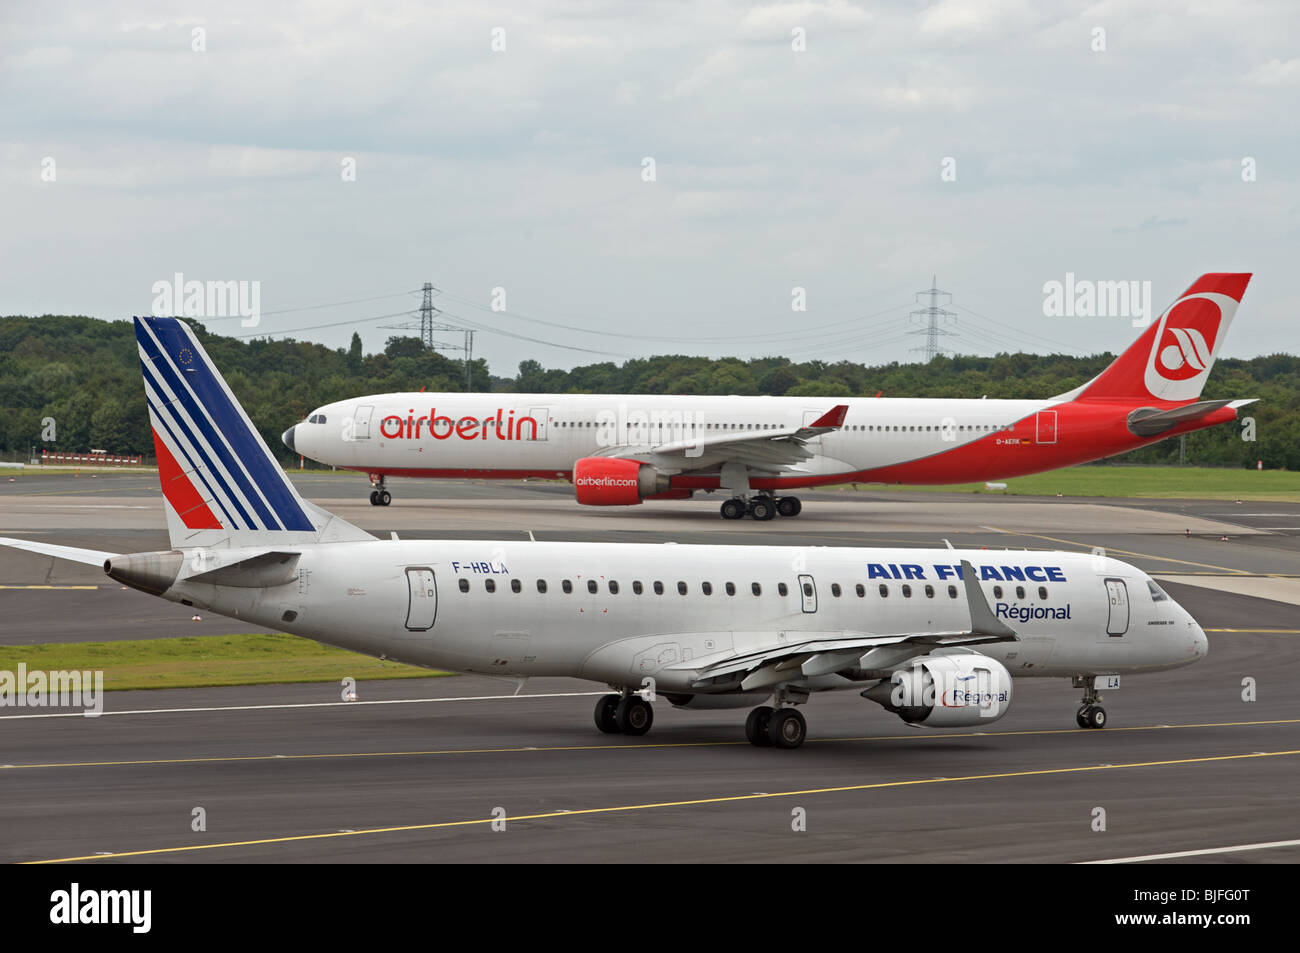 Air France Regional airliner, Dusseldorf, Germany. Stock Photo